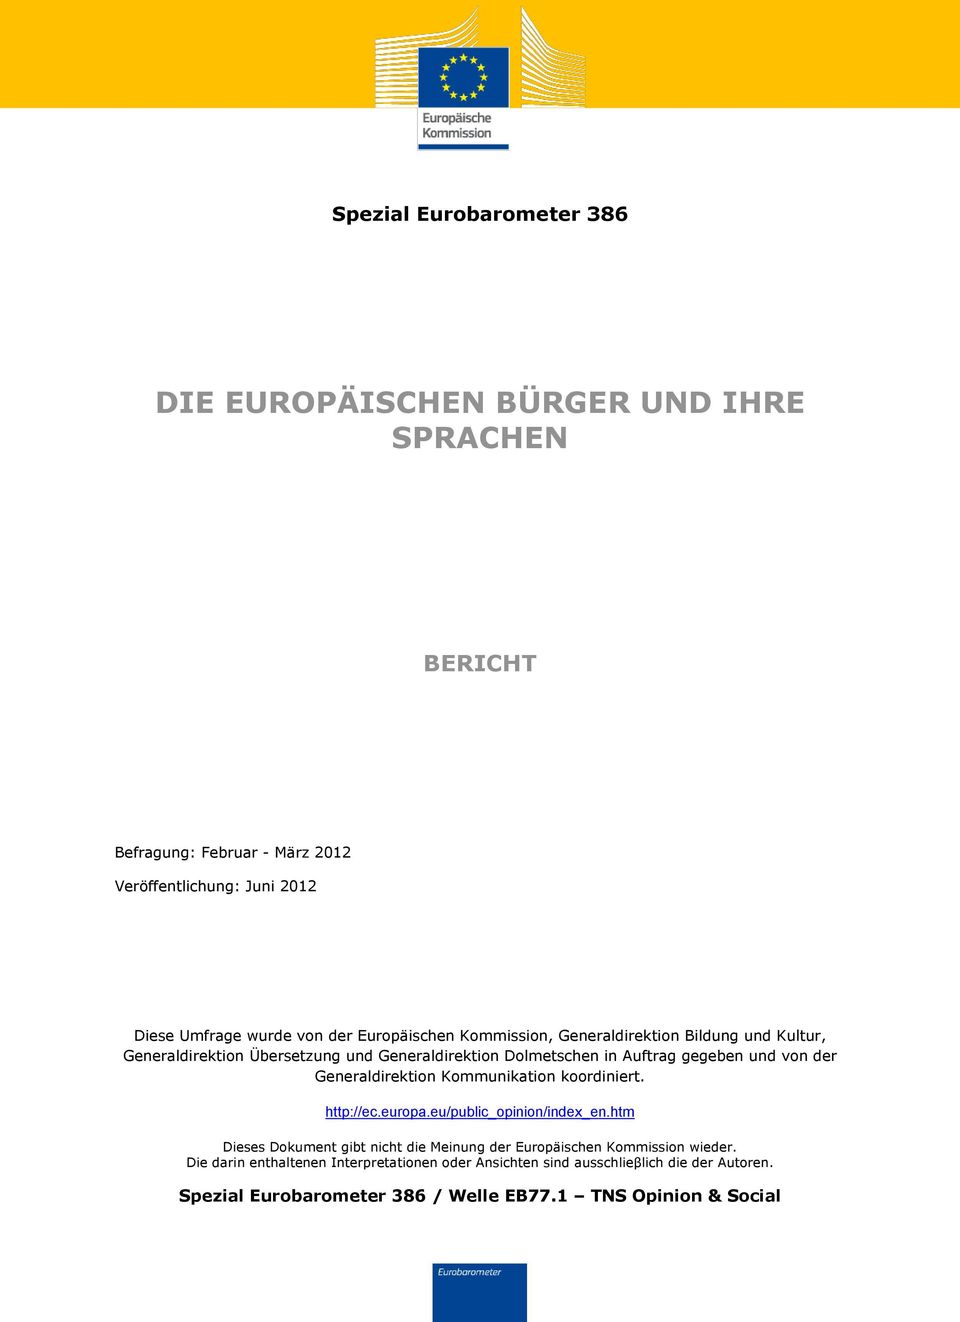 Generaldirektion Kommunikation koordiniert. http://ec.europa.eu/public_opinion/index_en.